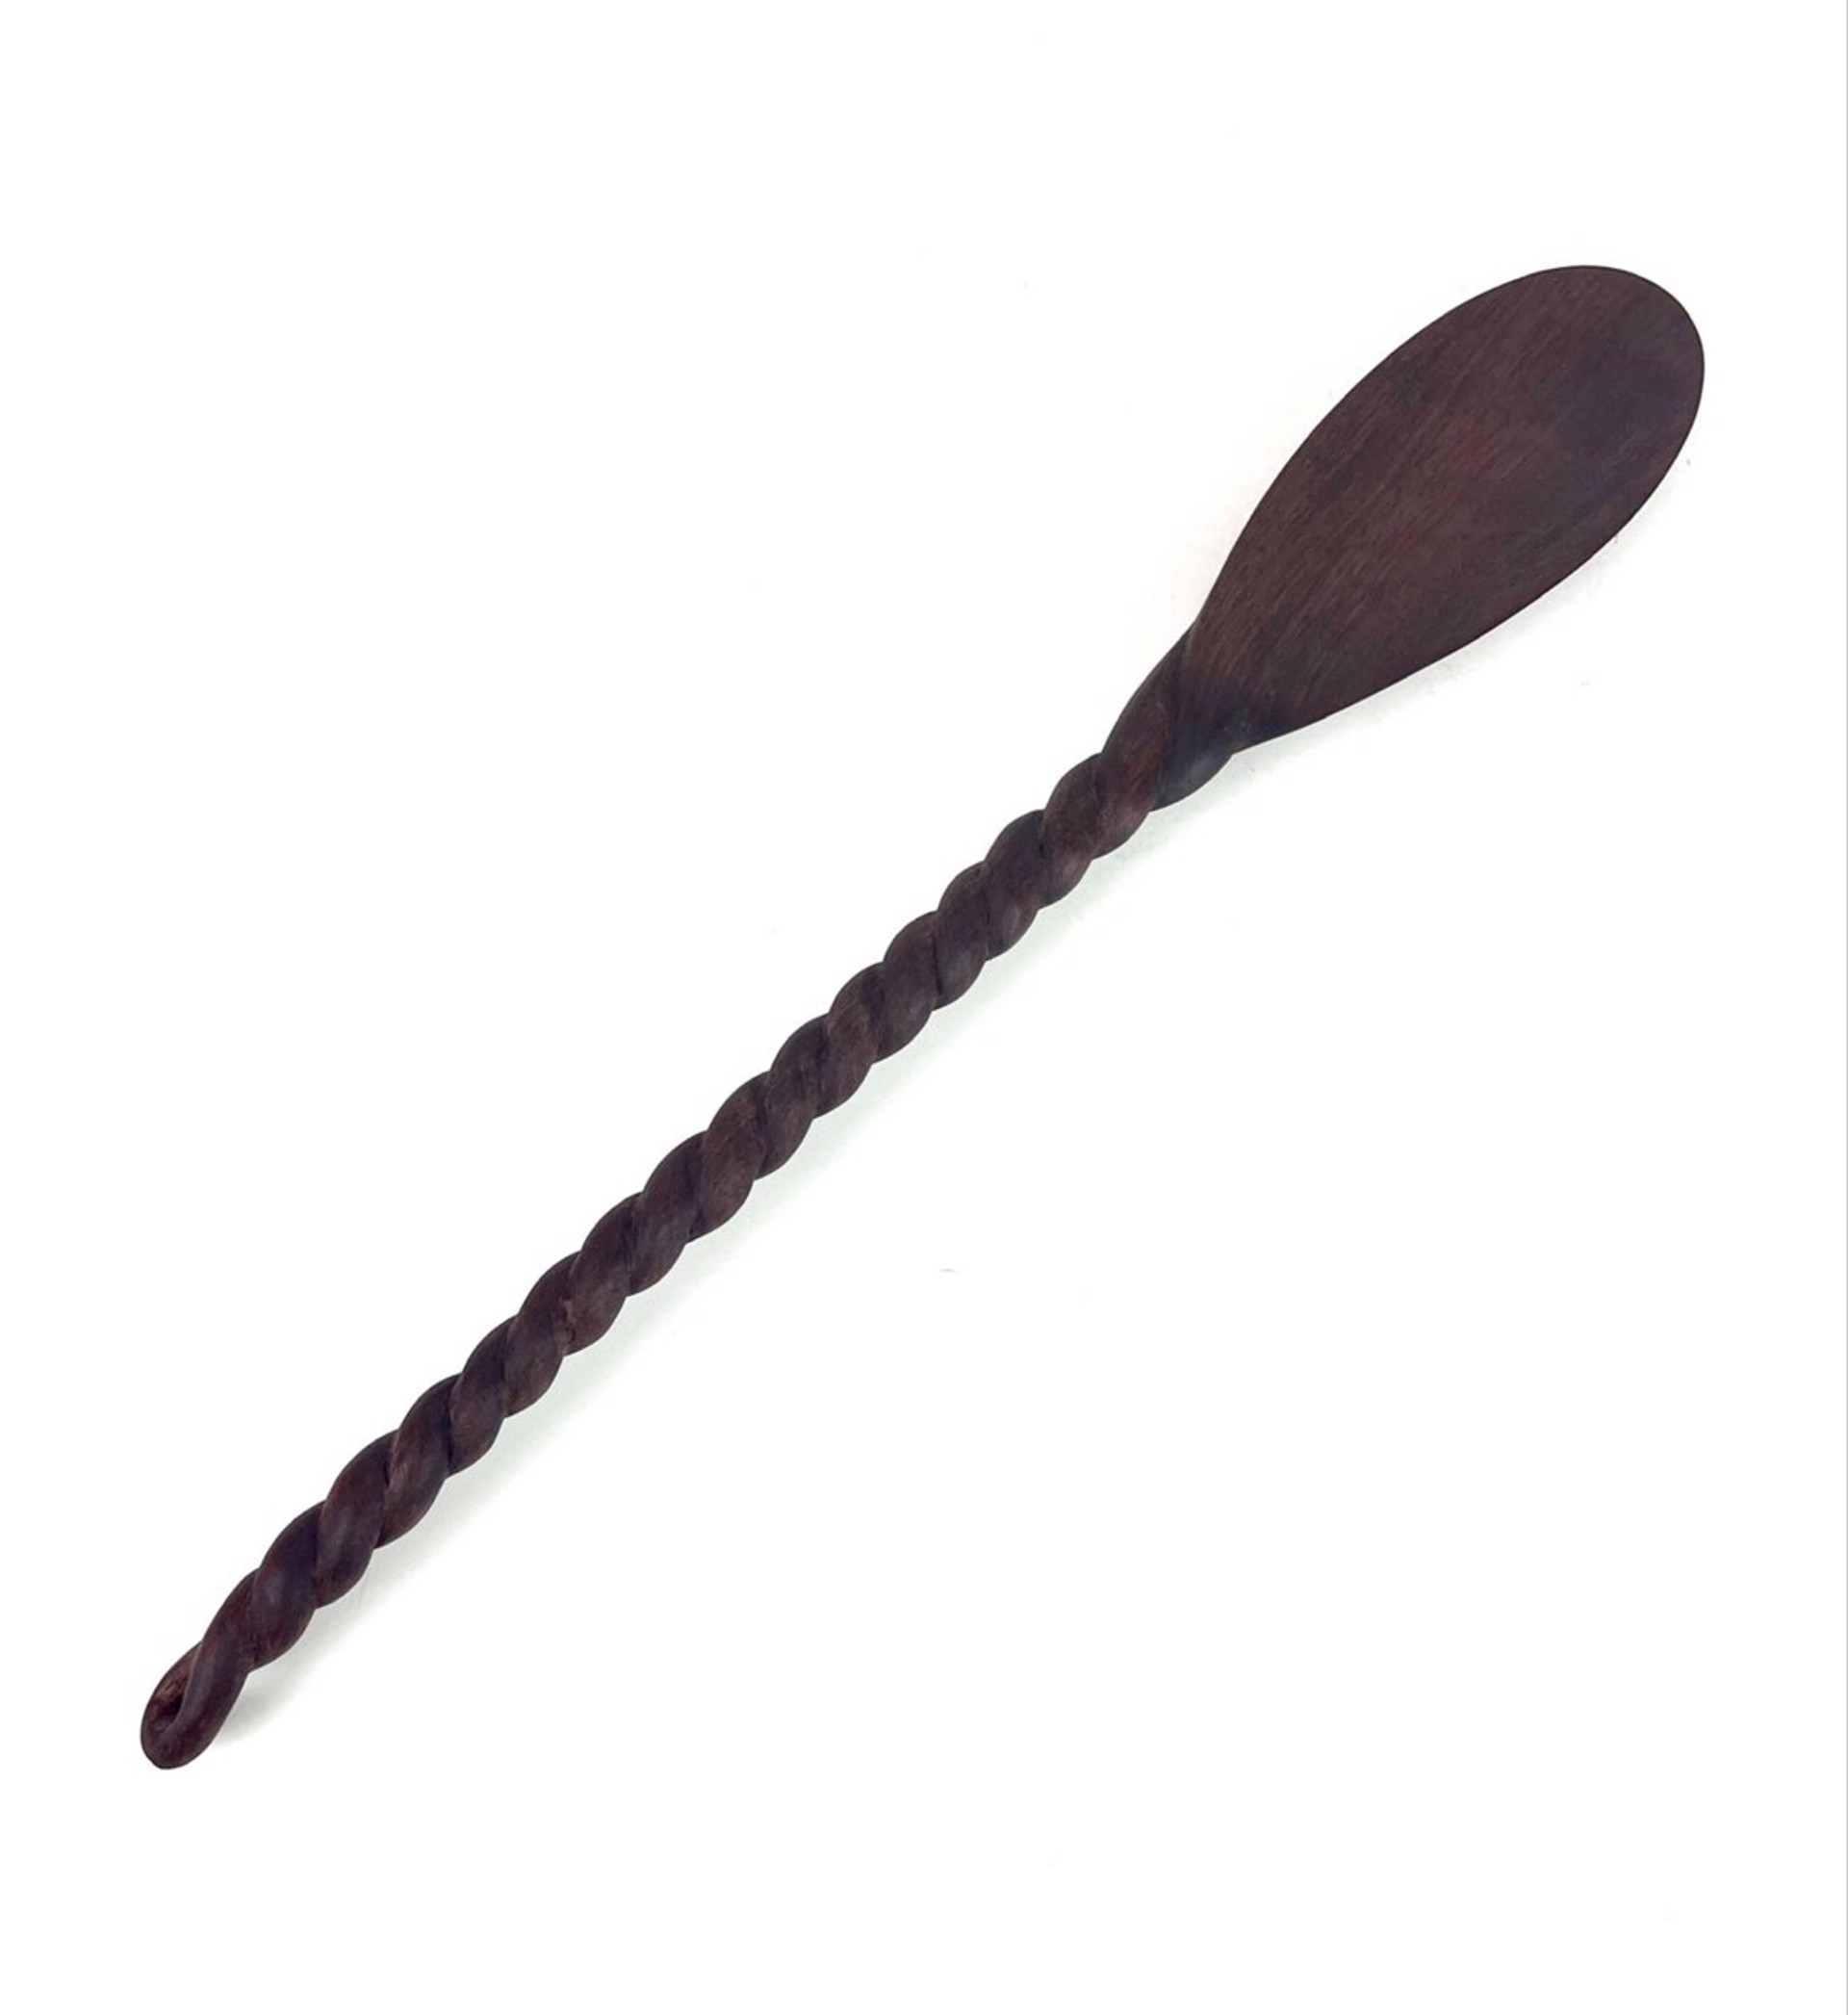 Hand-Carved Black Walnut Spoon by Traci Rhoades